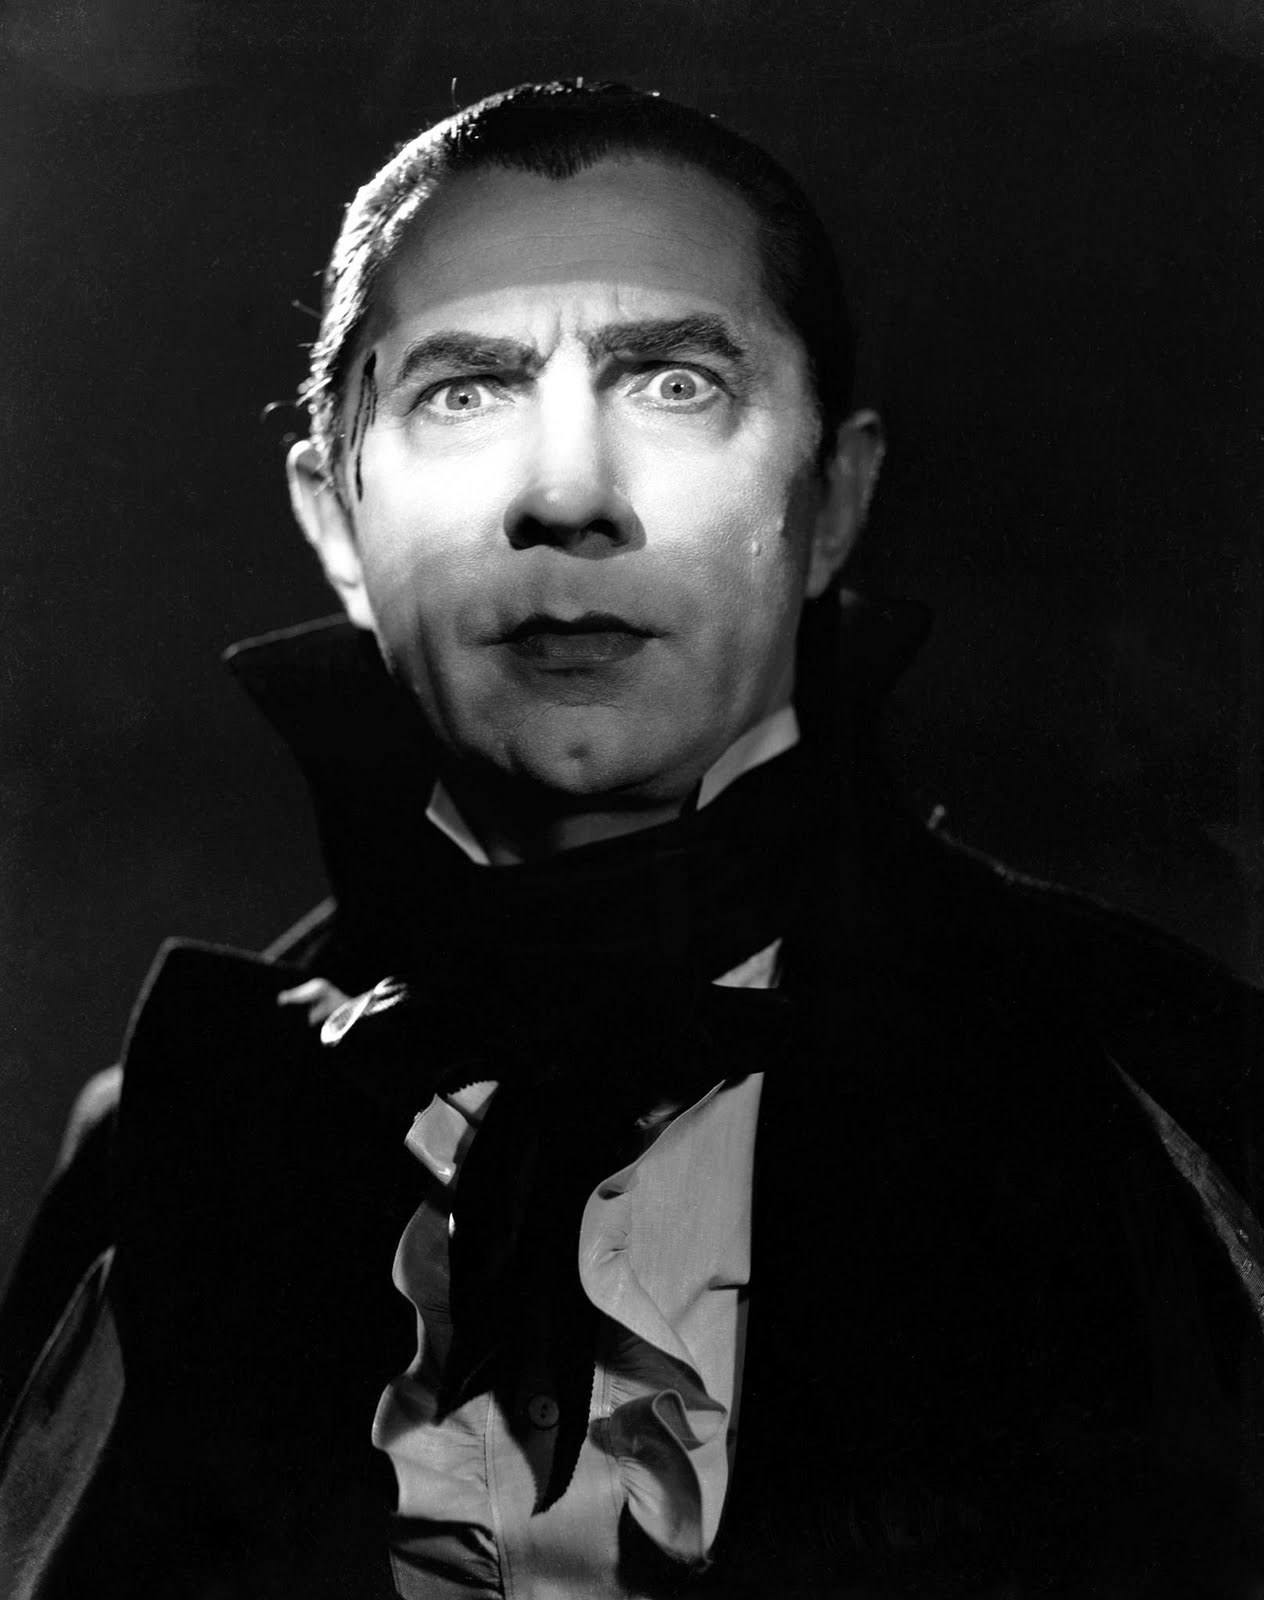 imagen de Nosferatu